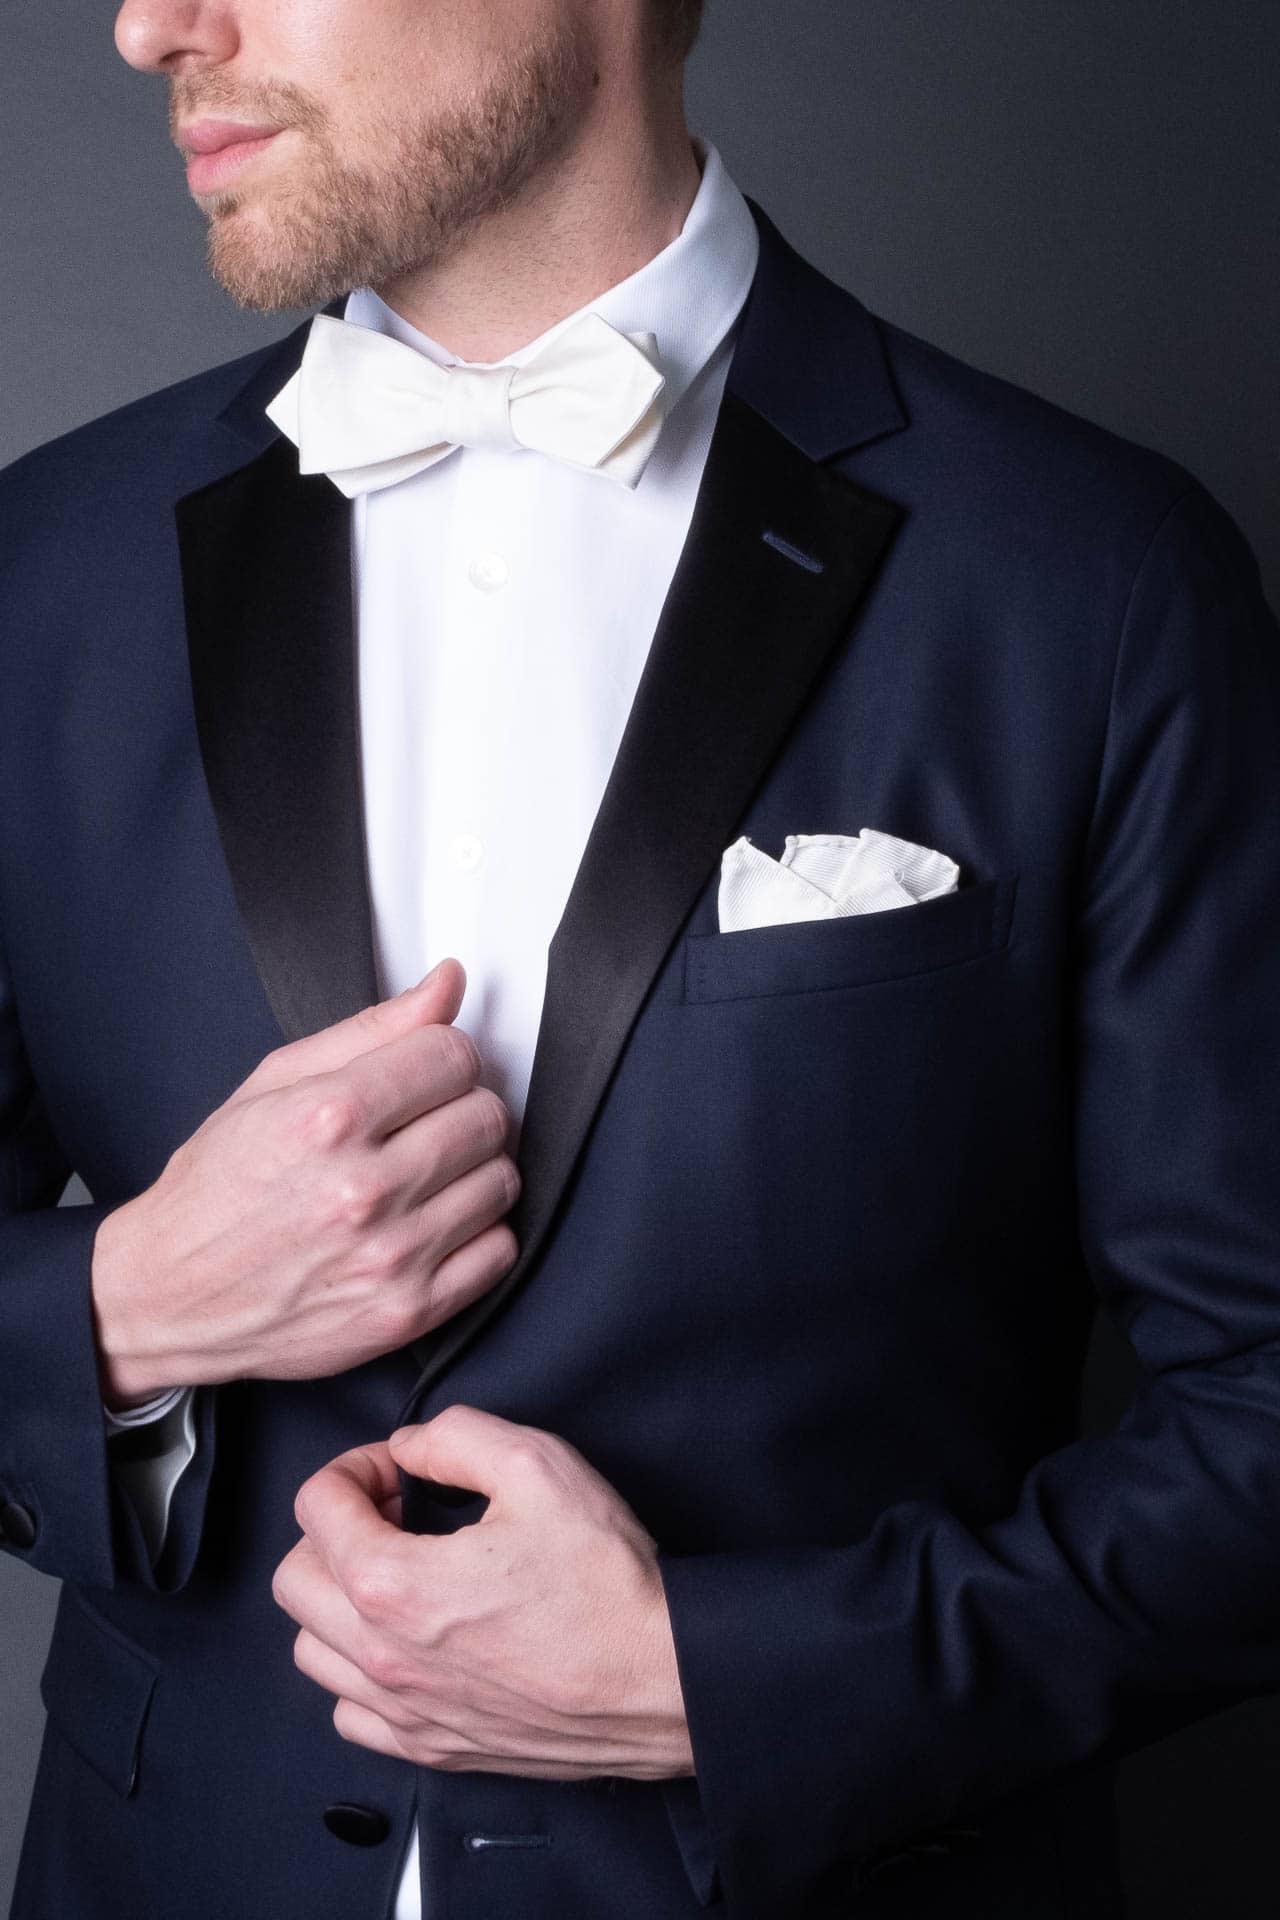 White tuxedo pocket square festive and formal woven silk hand made.